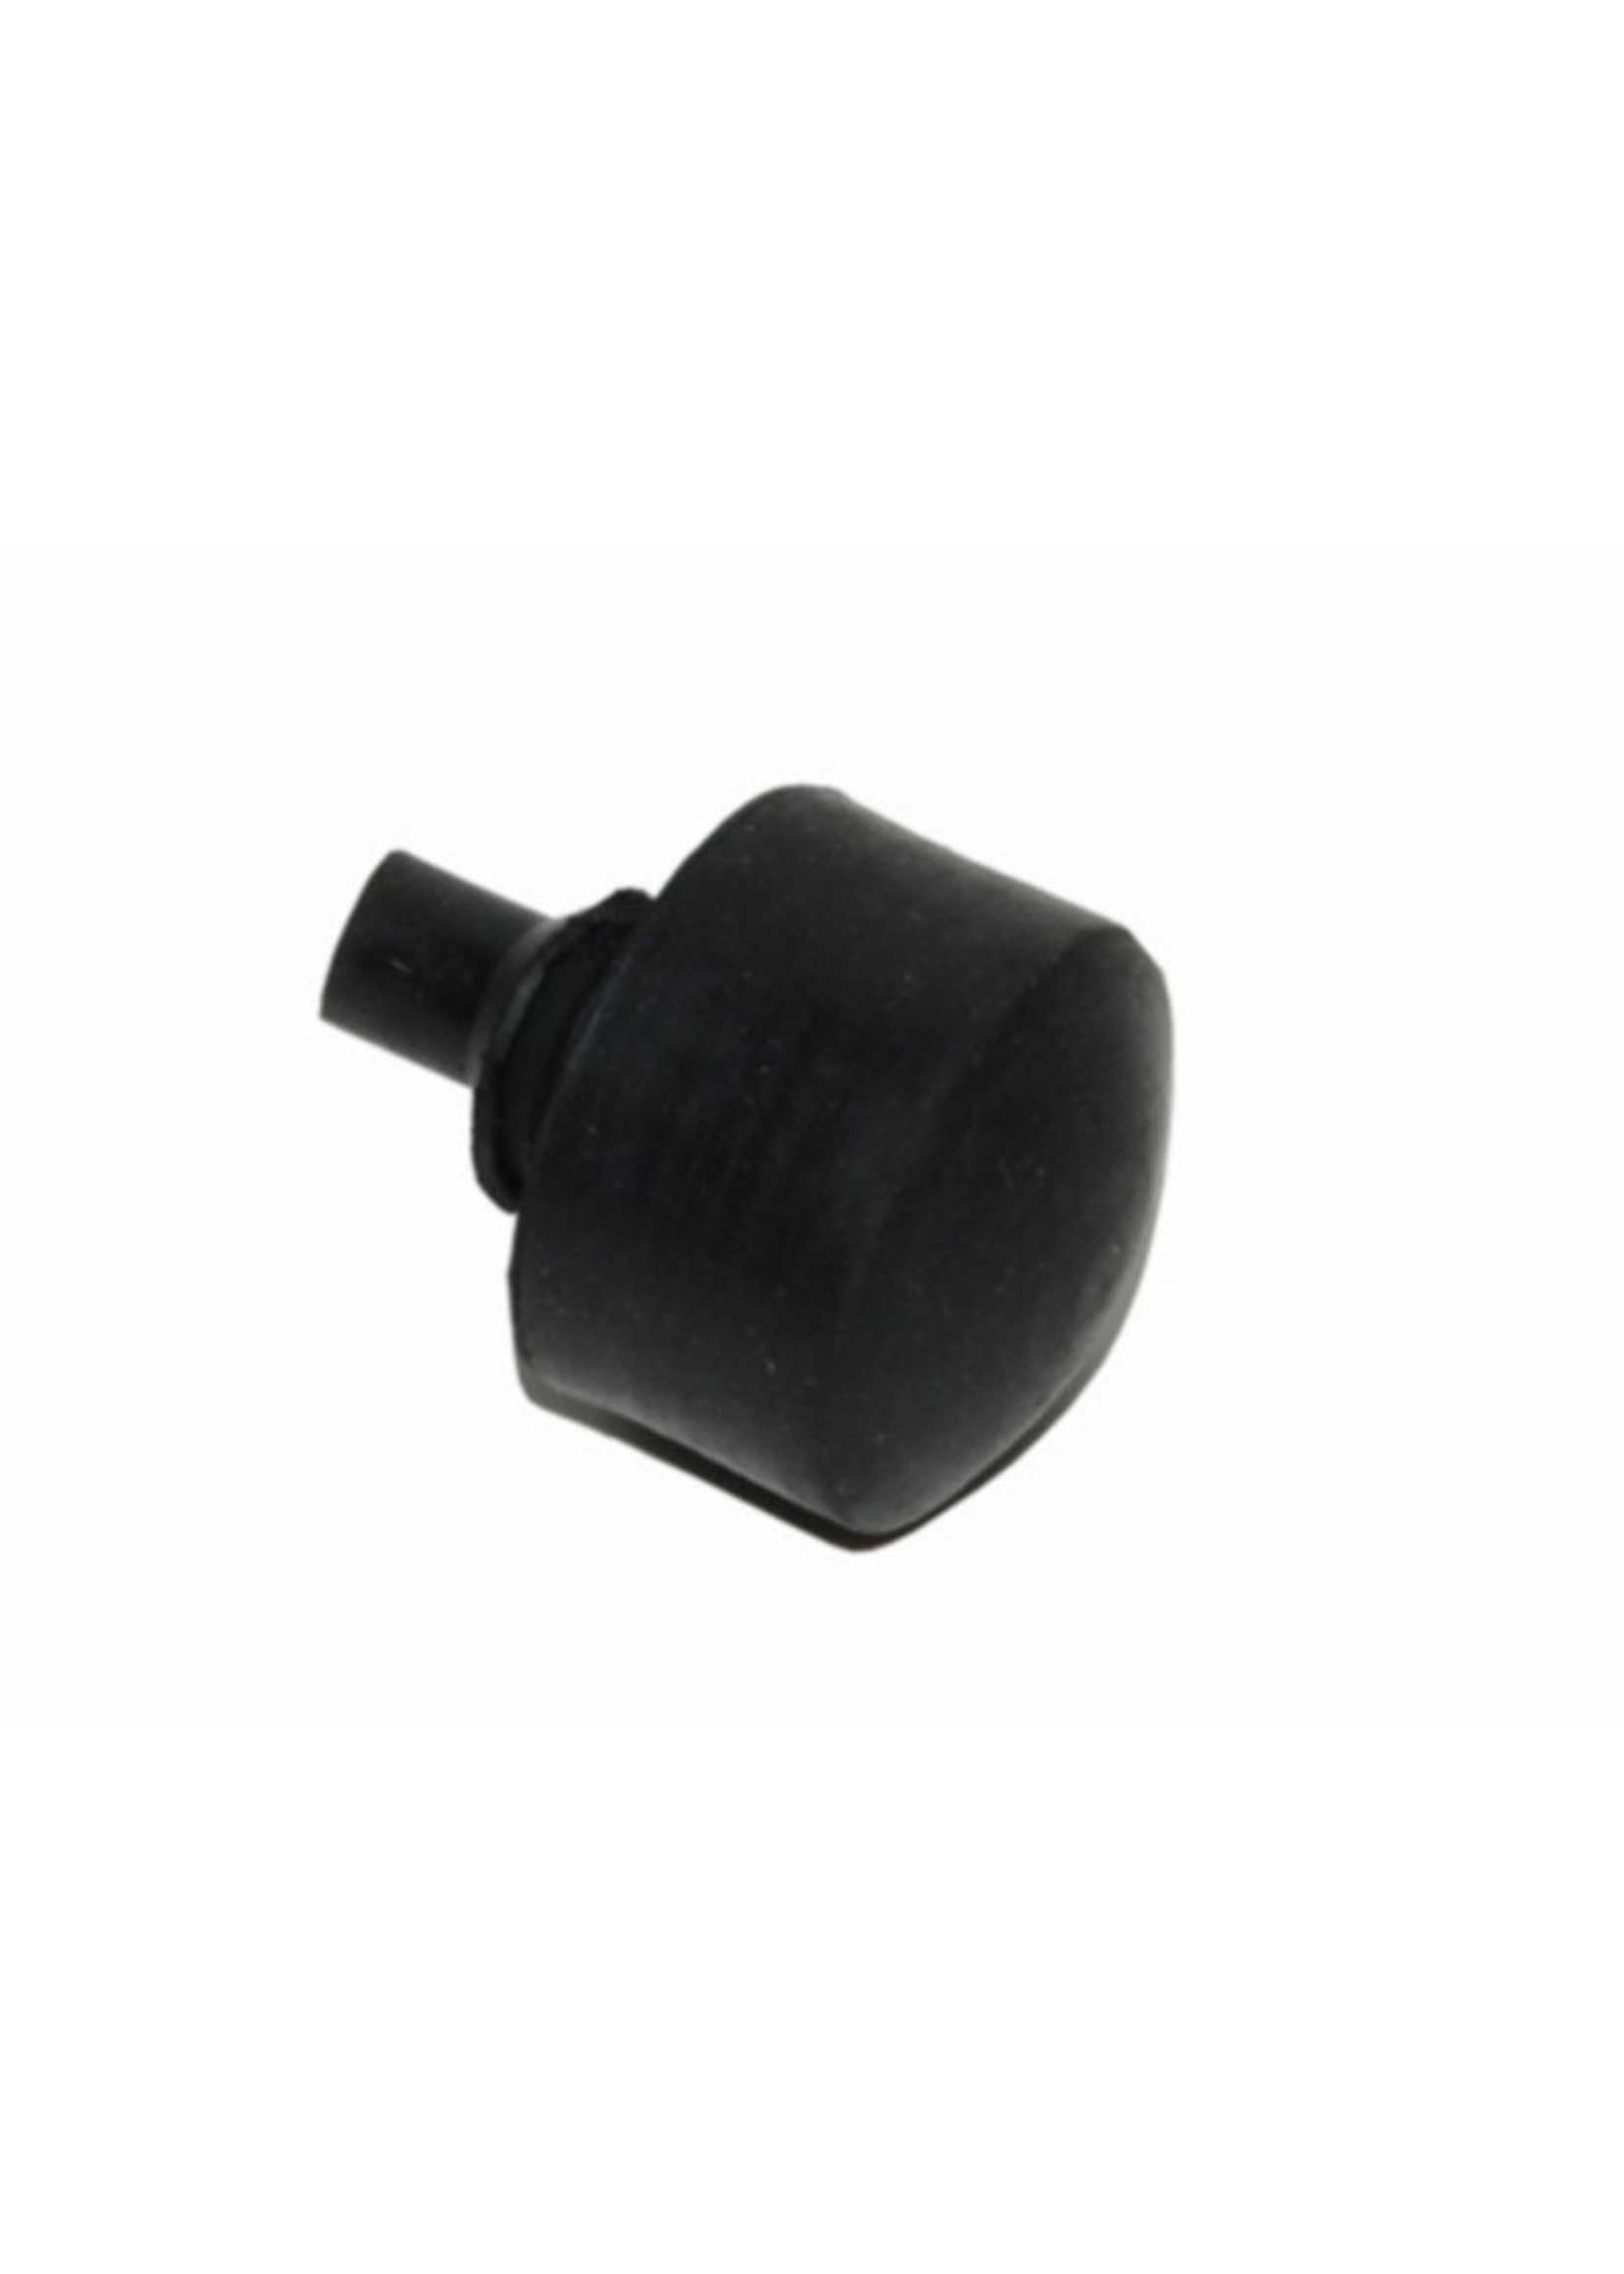 Benzhou rubber onderstandaard vx50agm/chi lx/nap